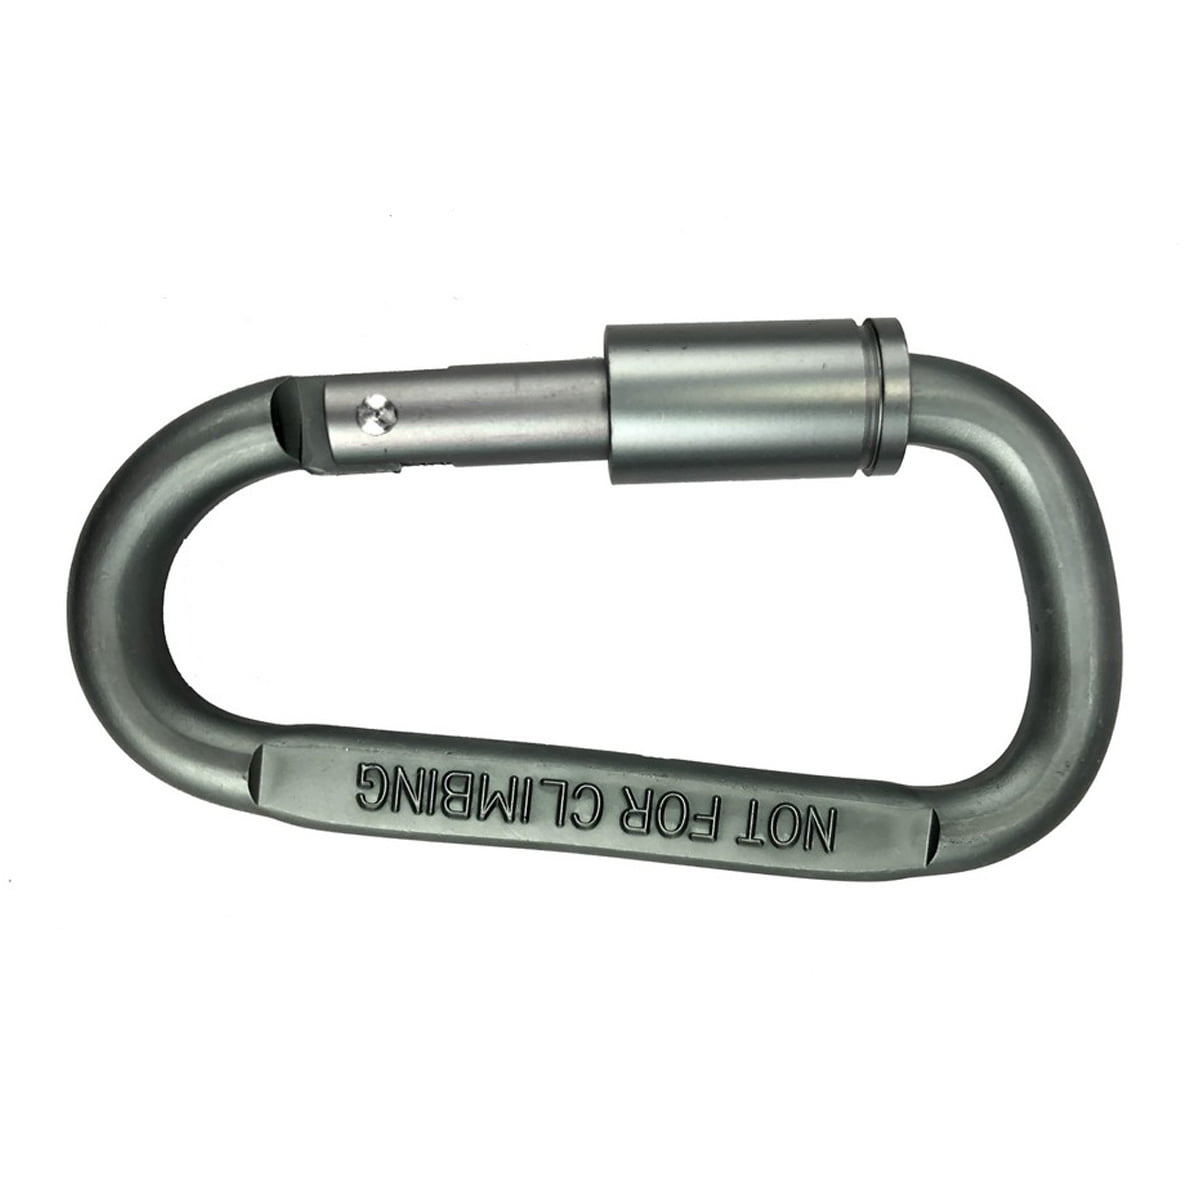 Aluminum Lot 120 High Quality Carabiner Spring Belt Clip Key Chain 2.25" 